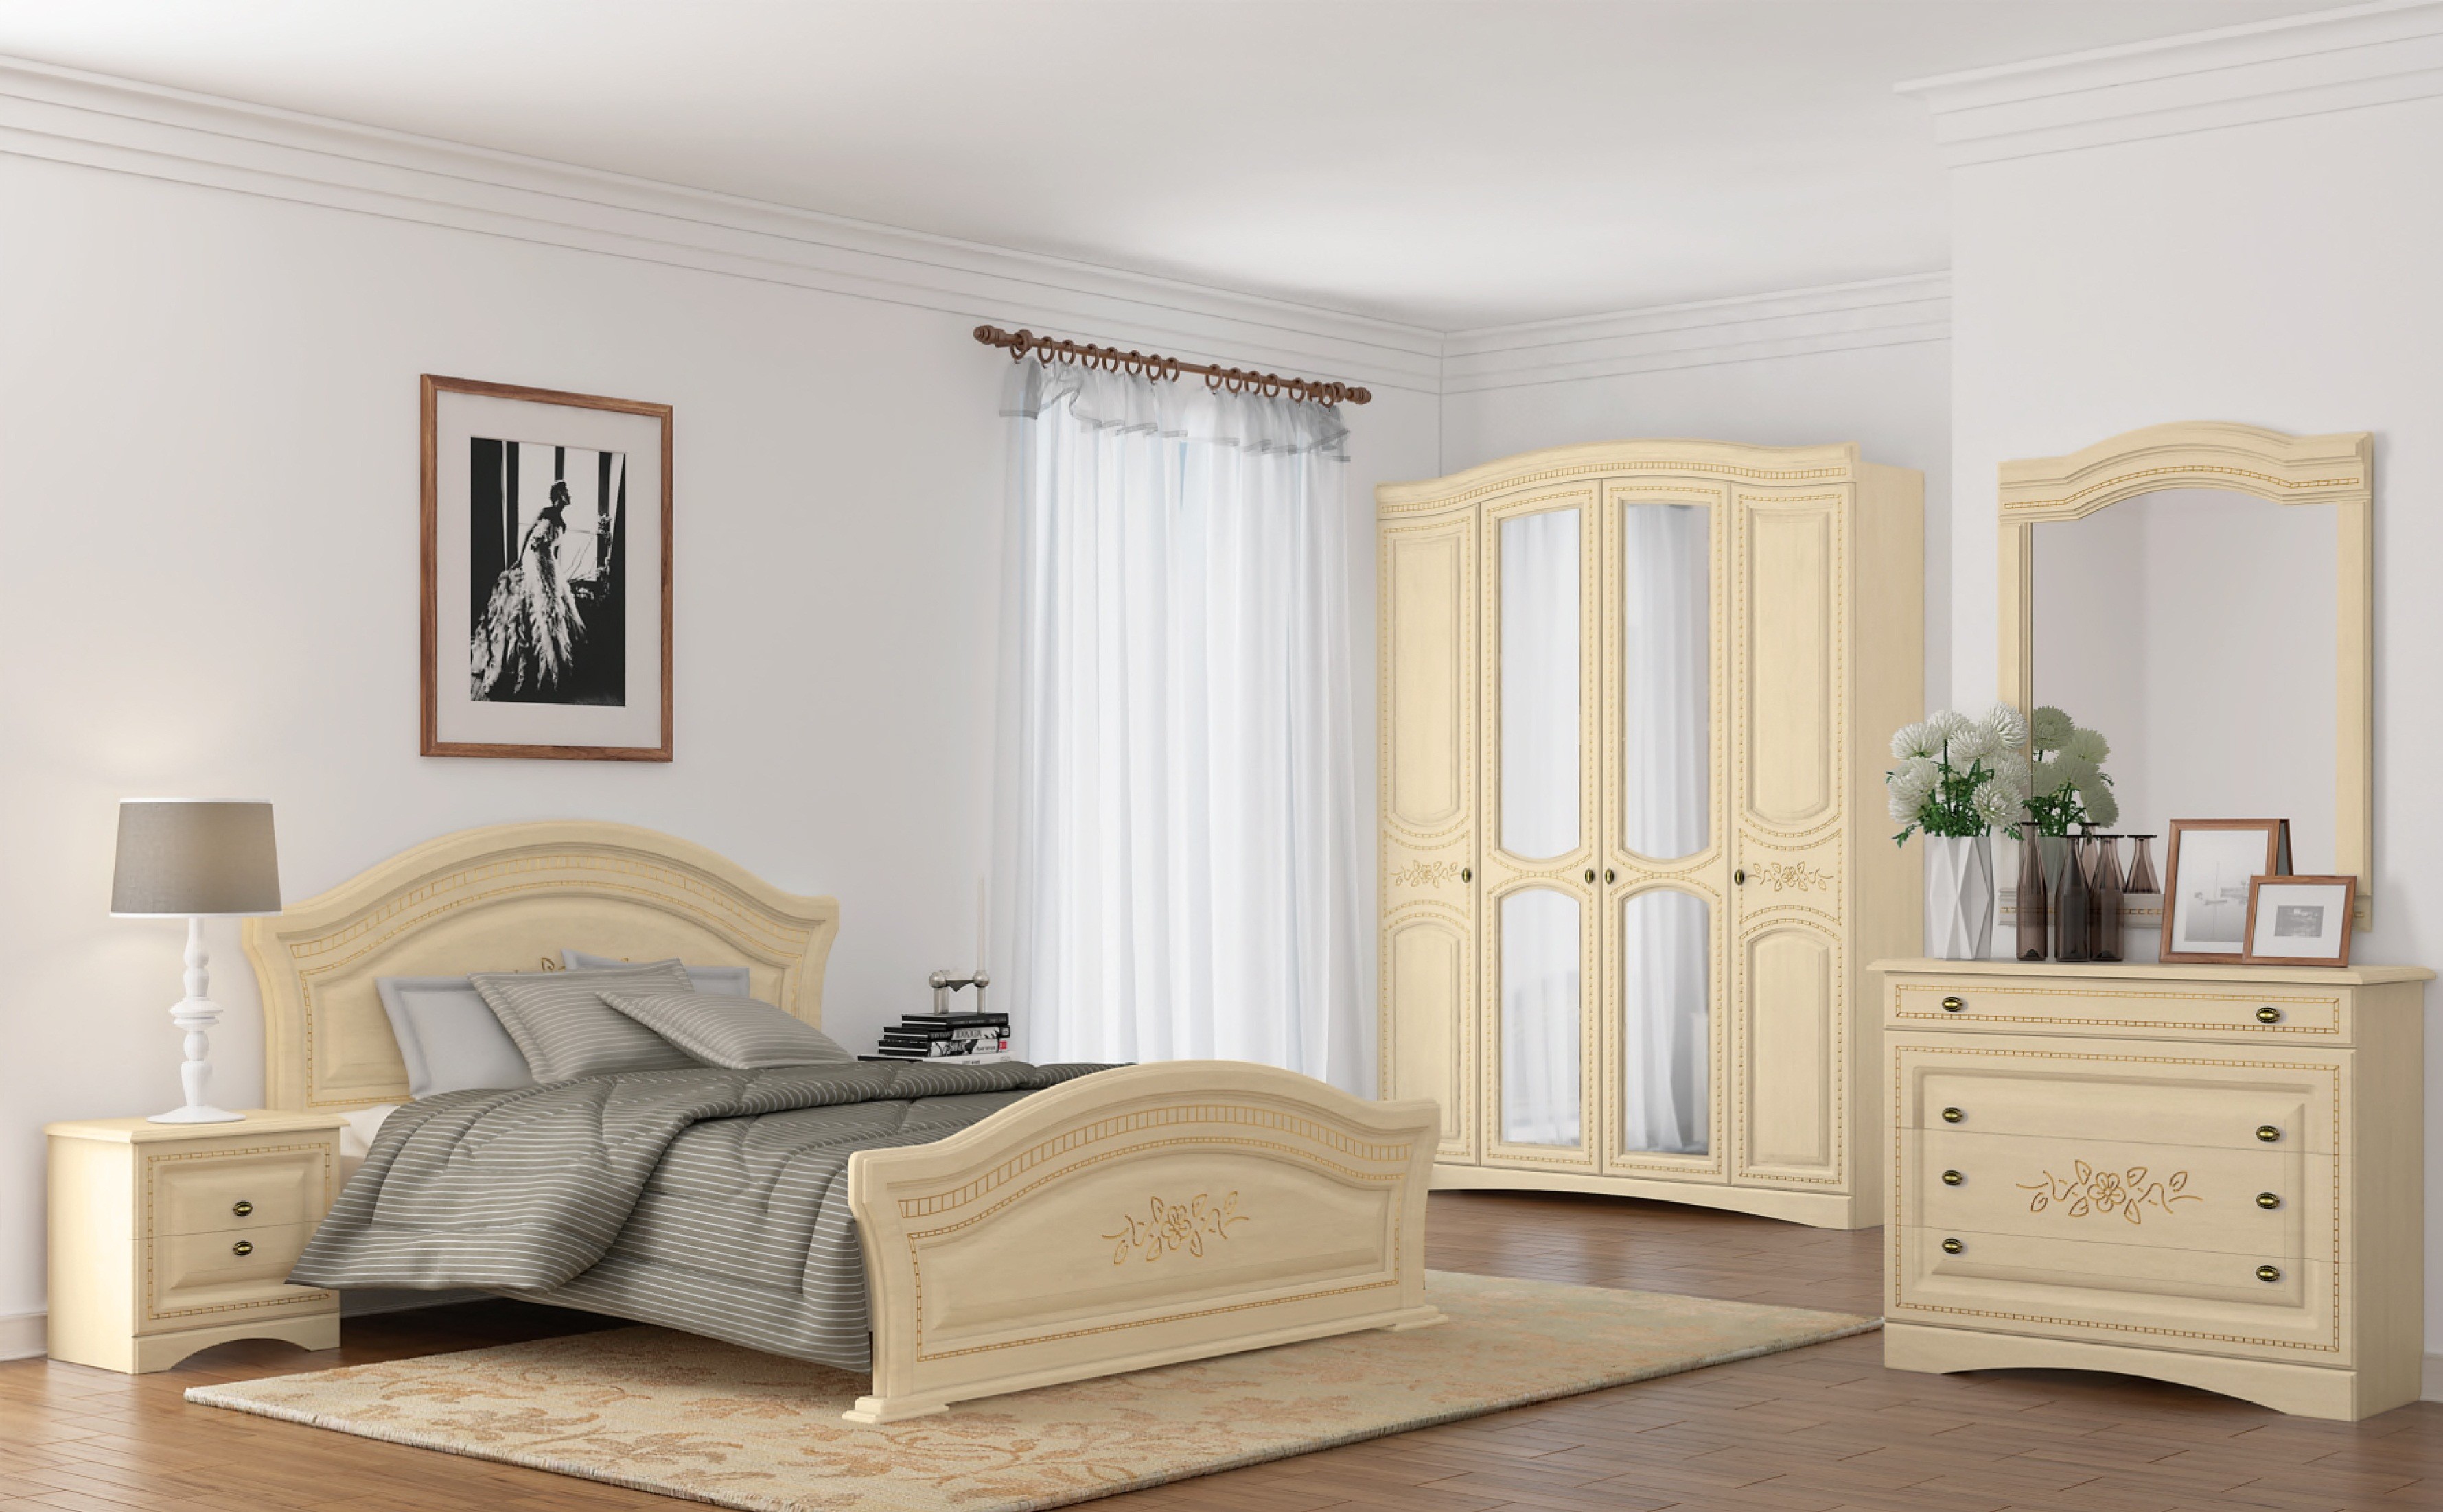 Dormitor Venera Lux MDF – 4 USI MESTECAN